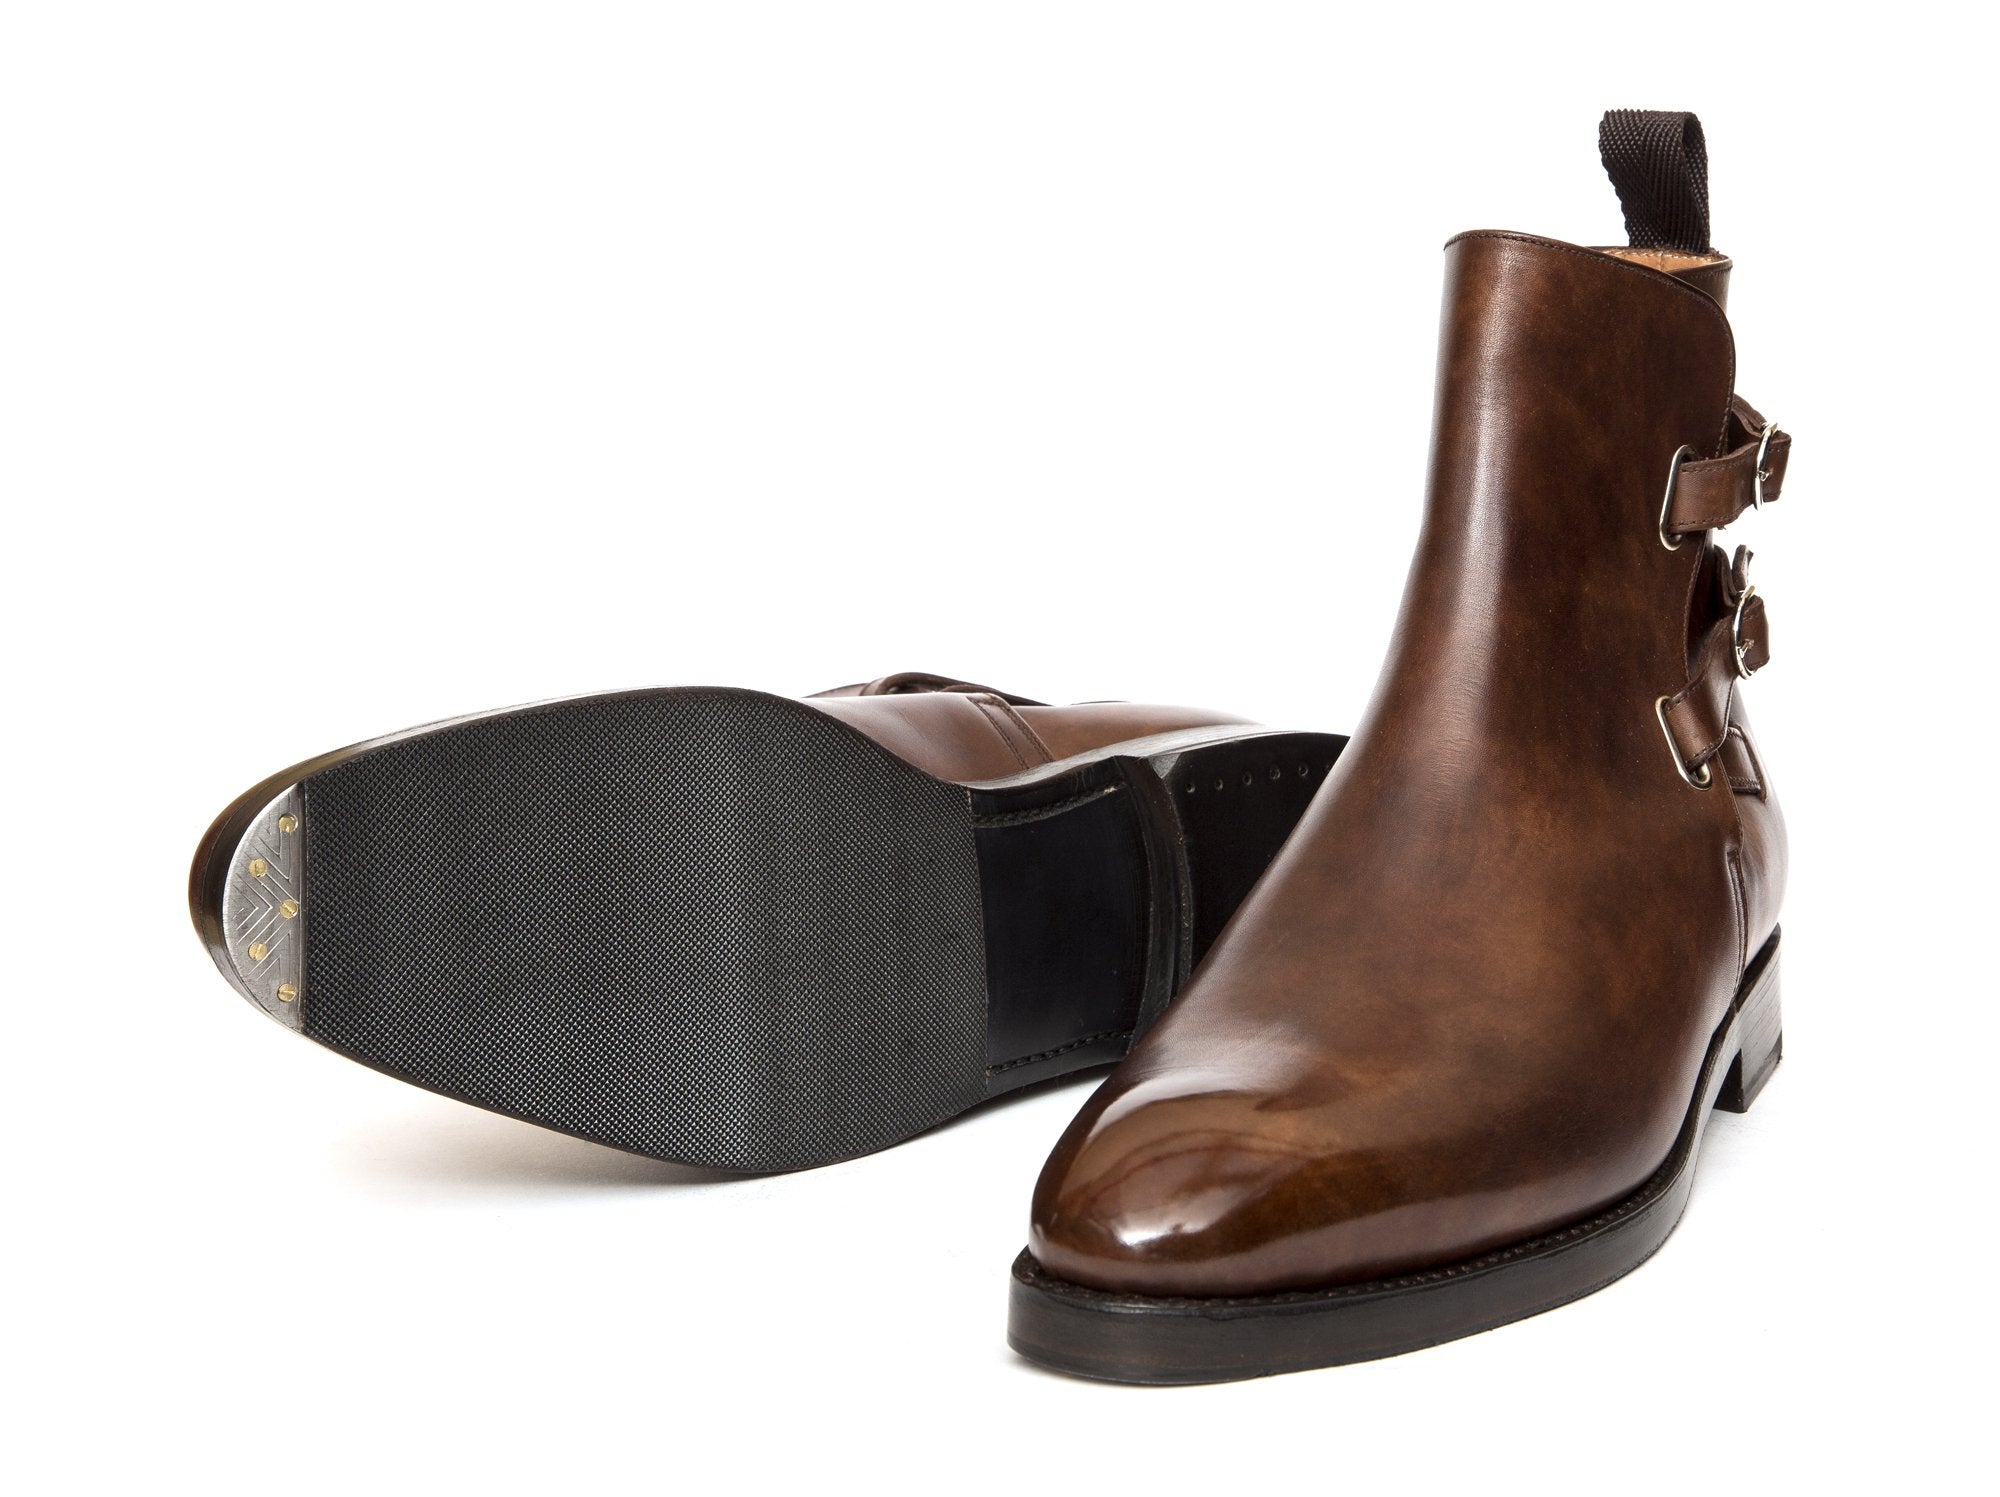 J.FitzPatrick Footwear - Genesee - Copper Museum Calf- TMG Last- Double Leather Sole